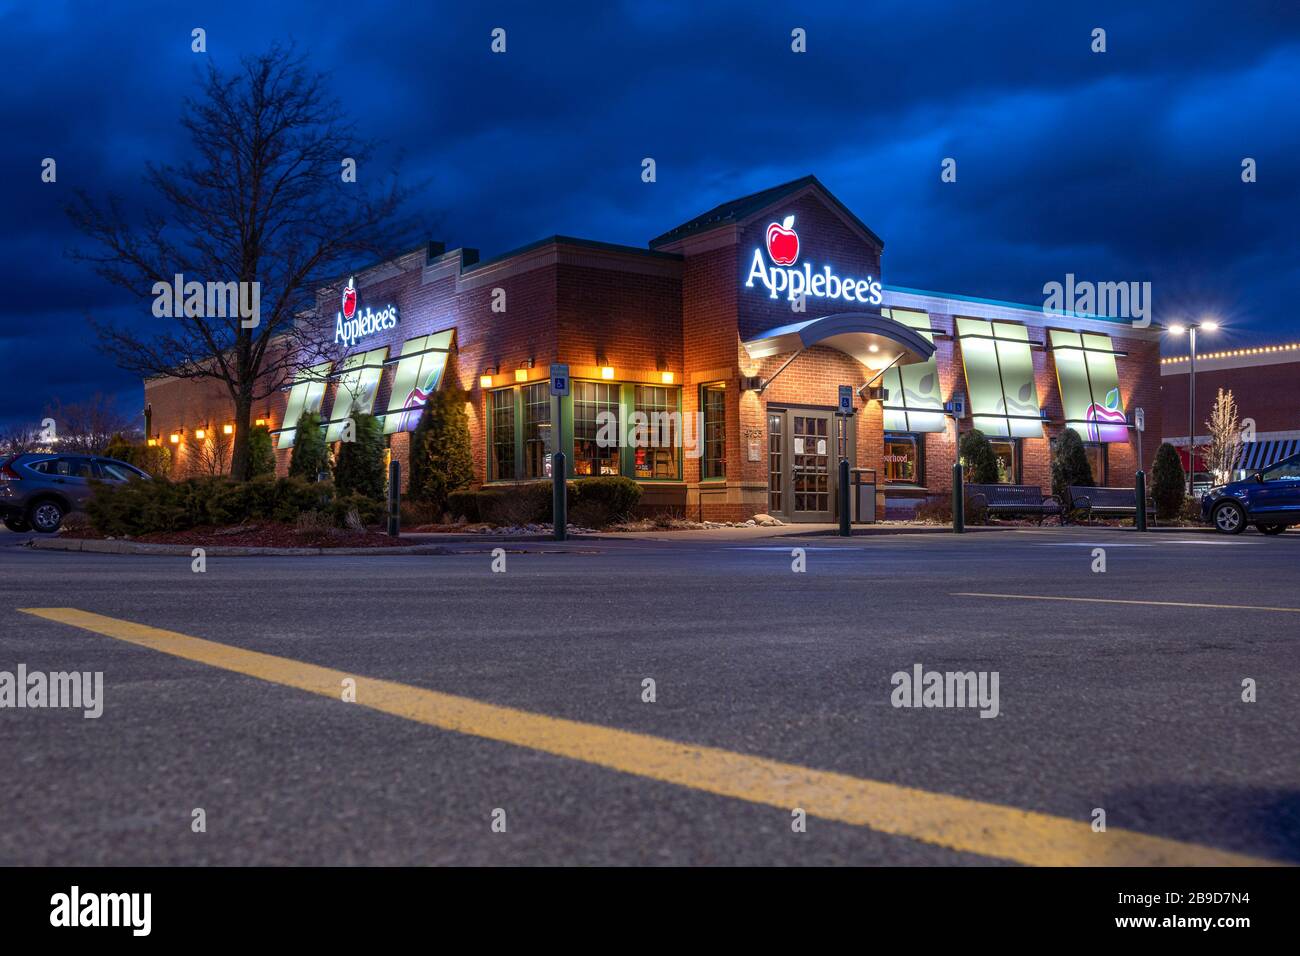 New Hartford, New York - Mar 20, 2020: Night View of Applebee's Restaurant Facade, Applebee's is an American Company, Developing franchises. Stock Photo